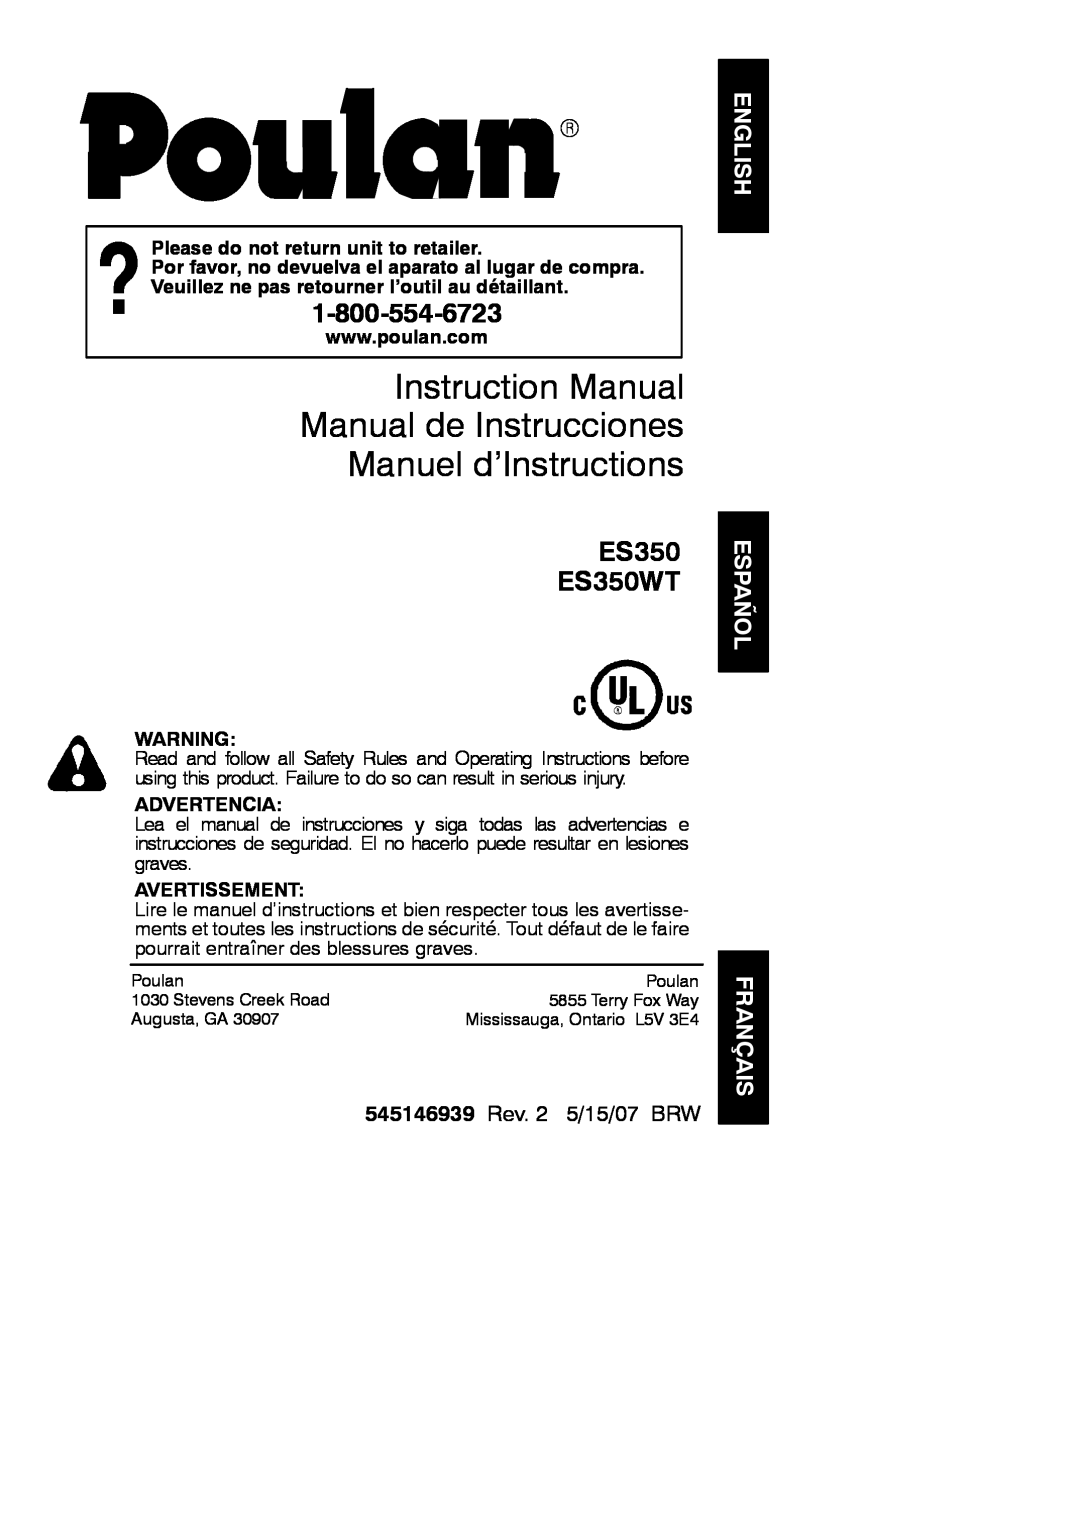 Poulan instruction manual Español, Français, ES350 ES350WT, 545146939 Rev. 2 5/15/07 BRW, Advertencia, Avertissement 